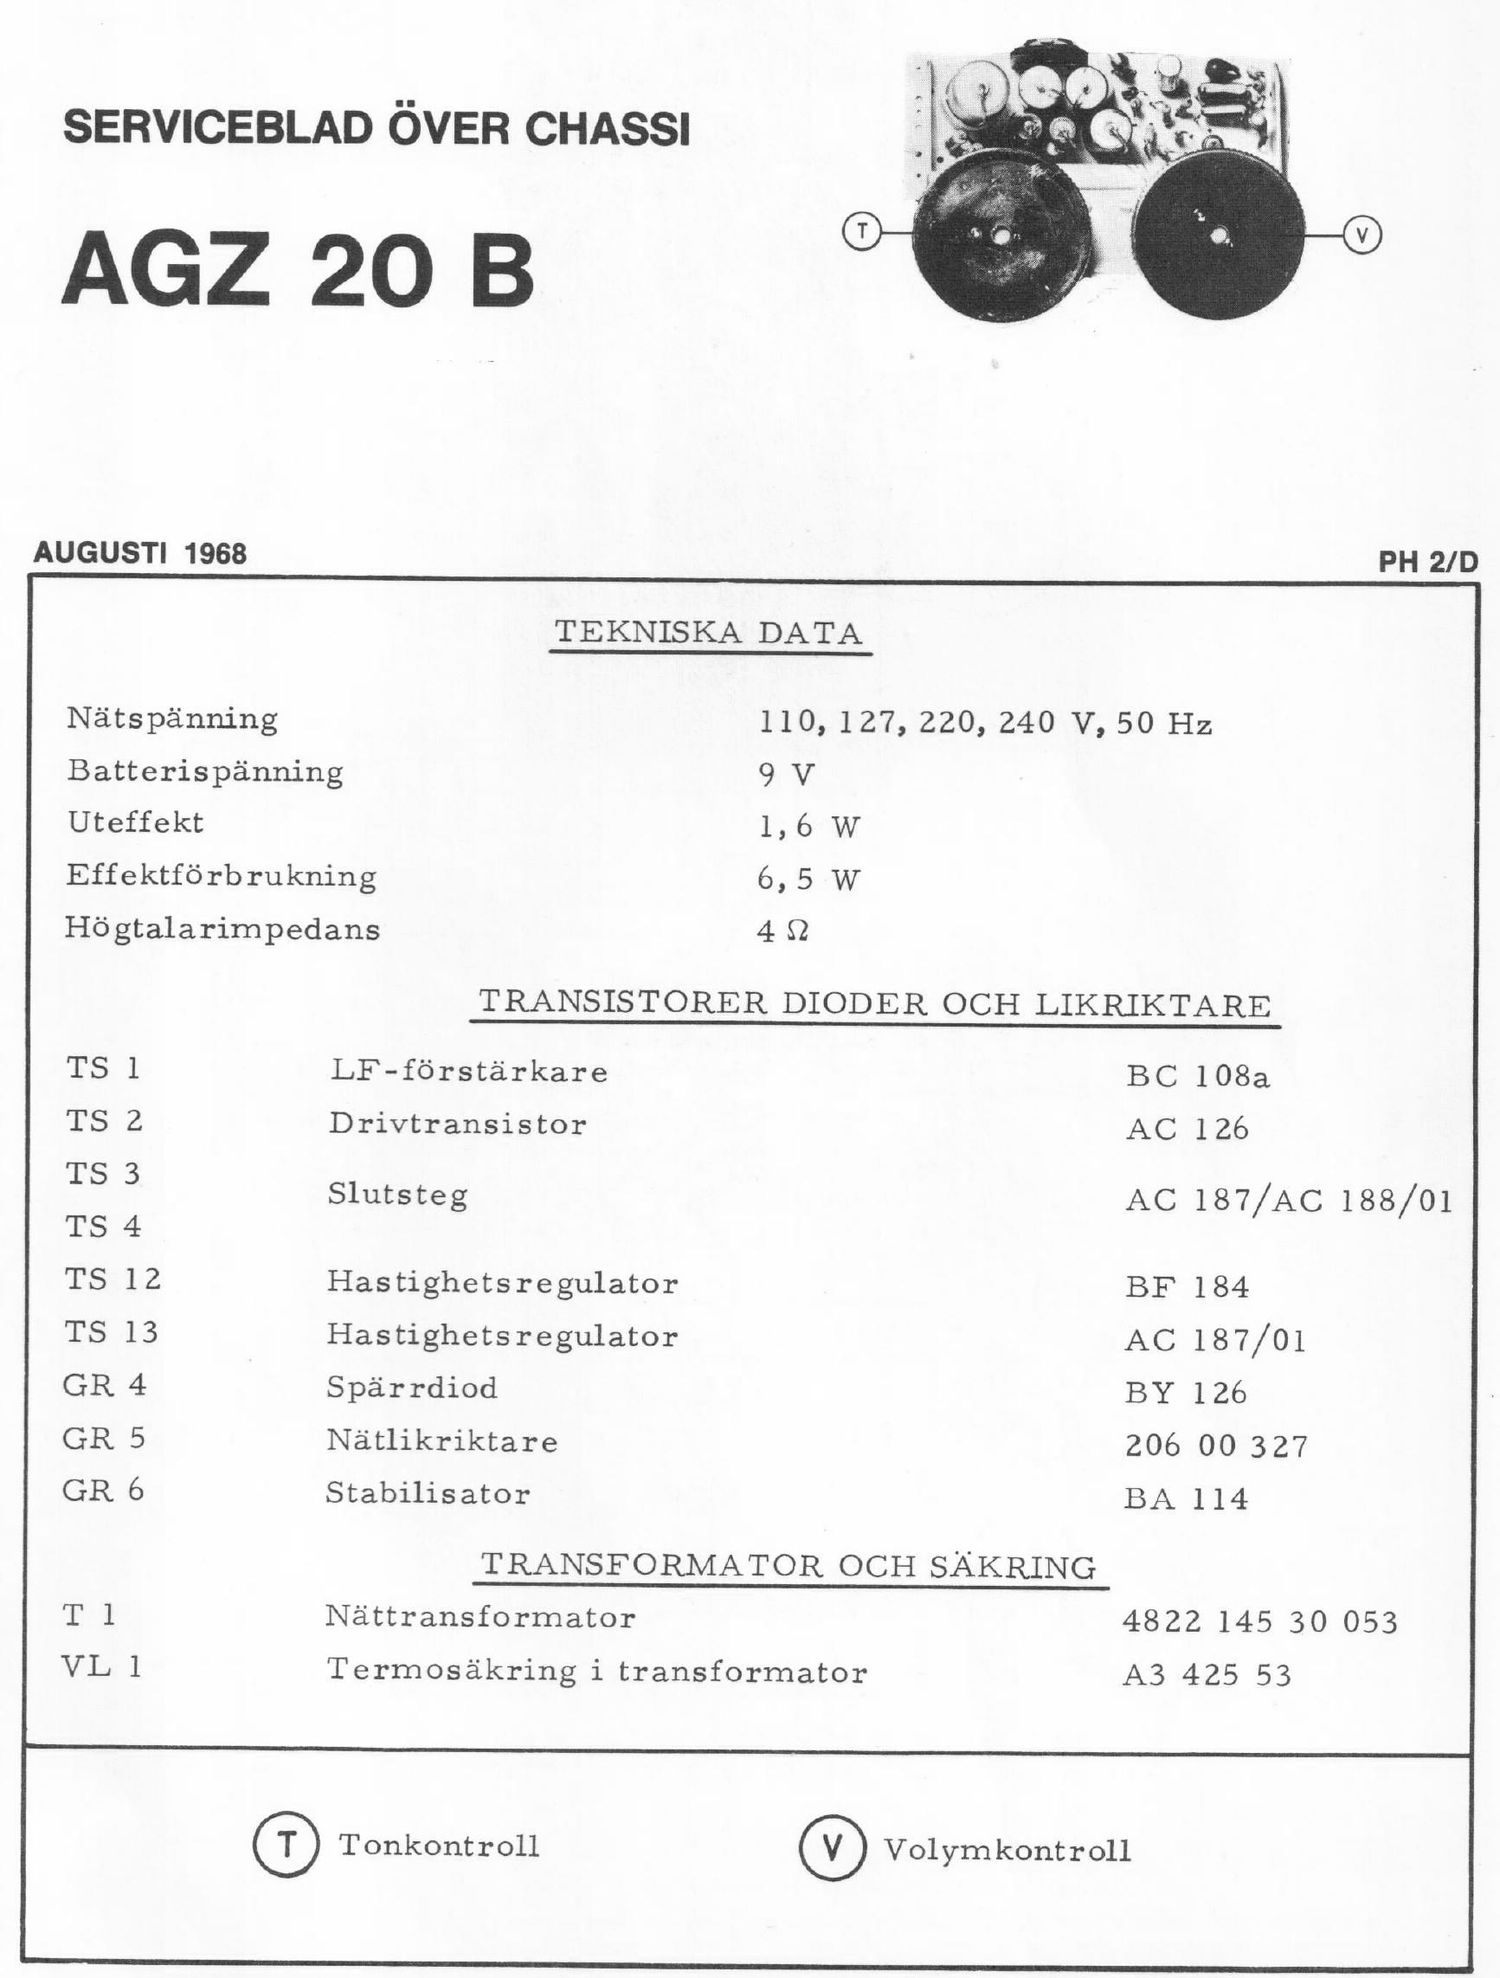 philips agz 20 b service manual